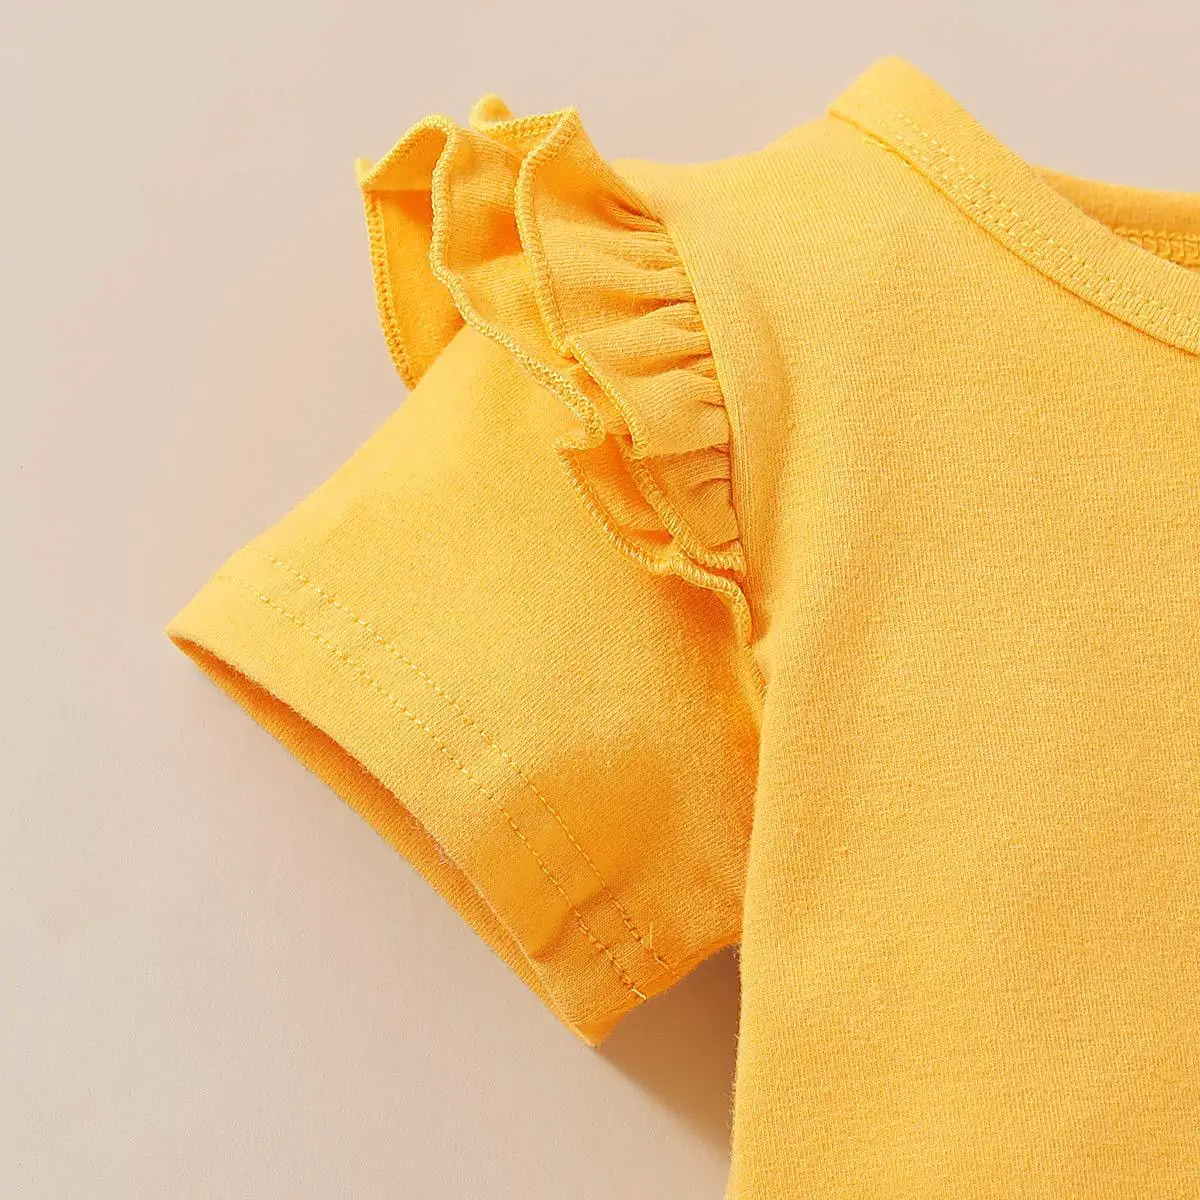 
Toddler Baby Kids Girl Summer Sleeveless yellow Flying sleeve T-Shirt Top shorts clothes set 